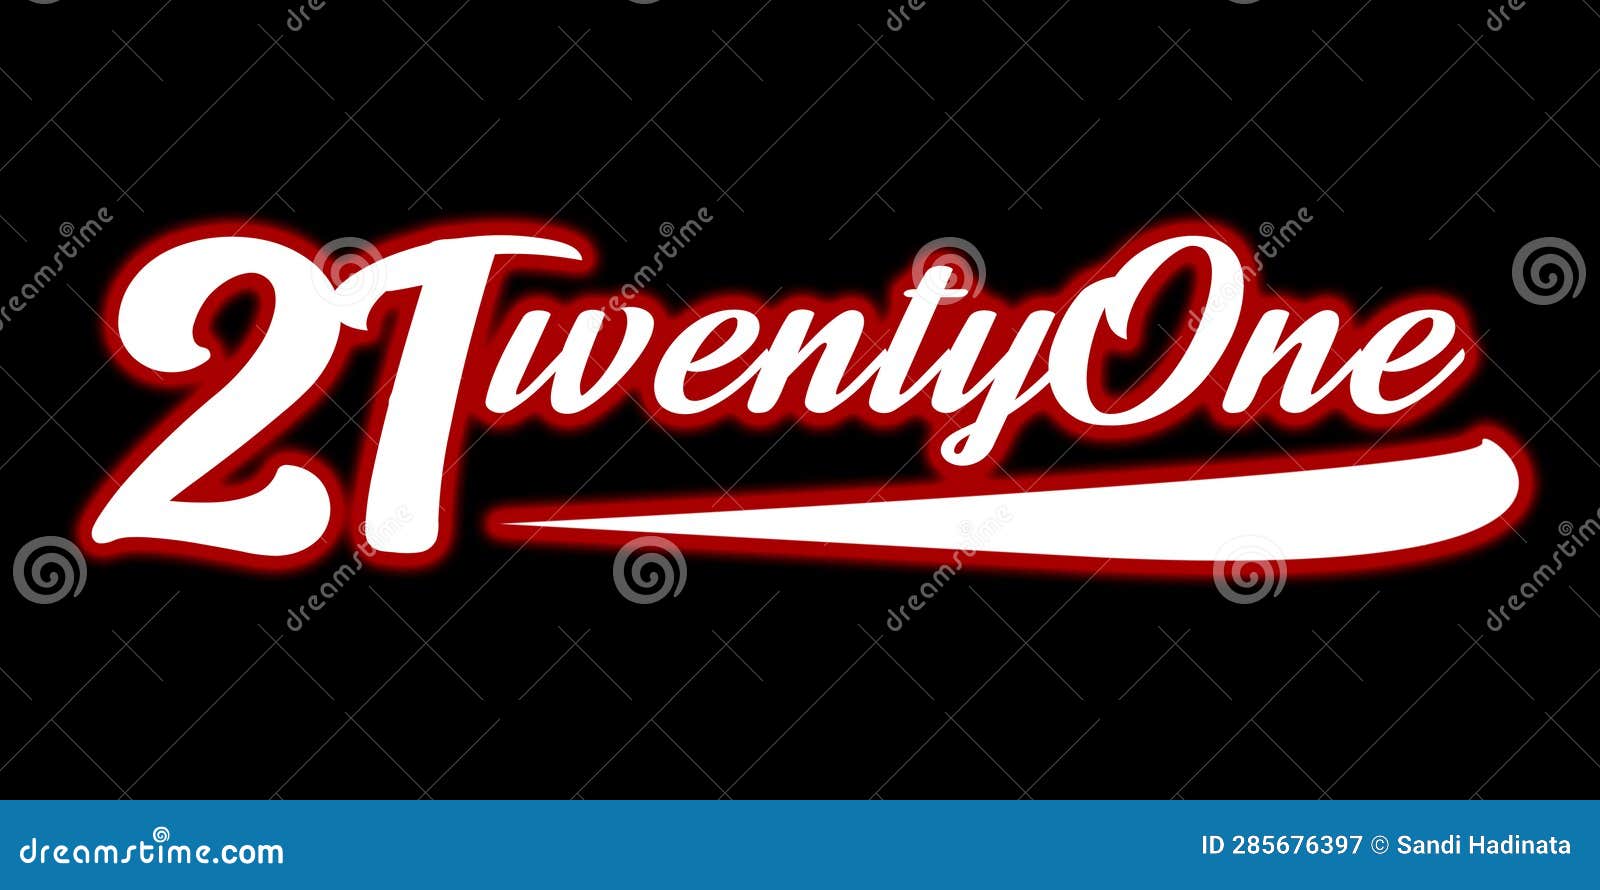 twentyone logo writing